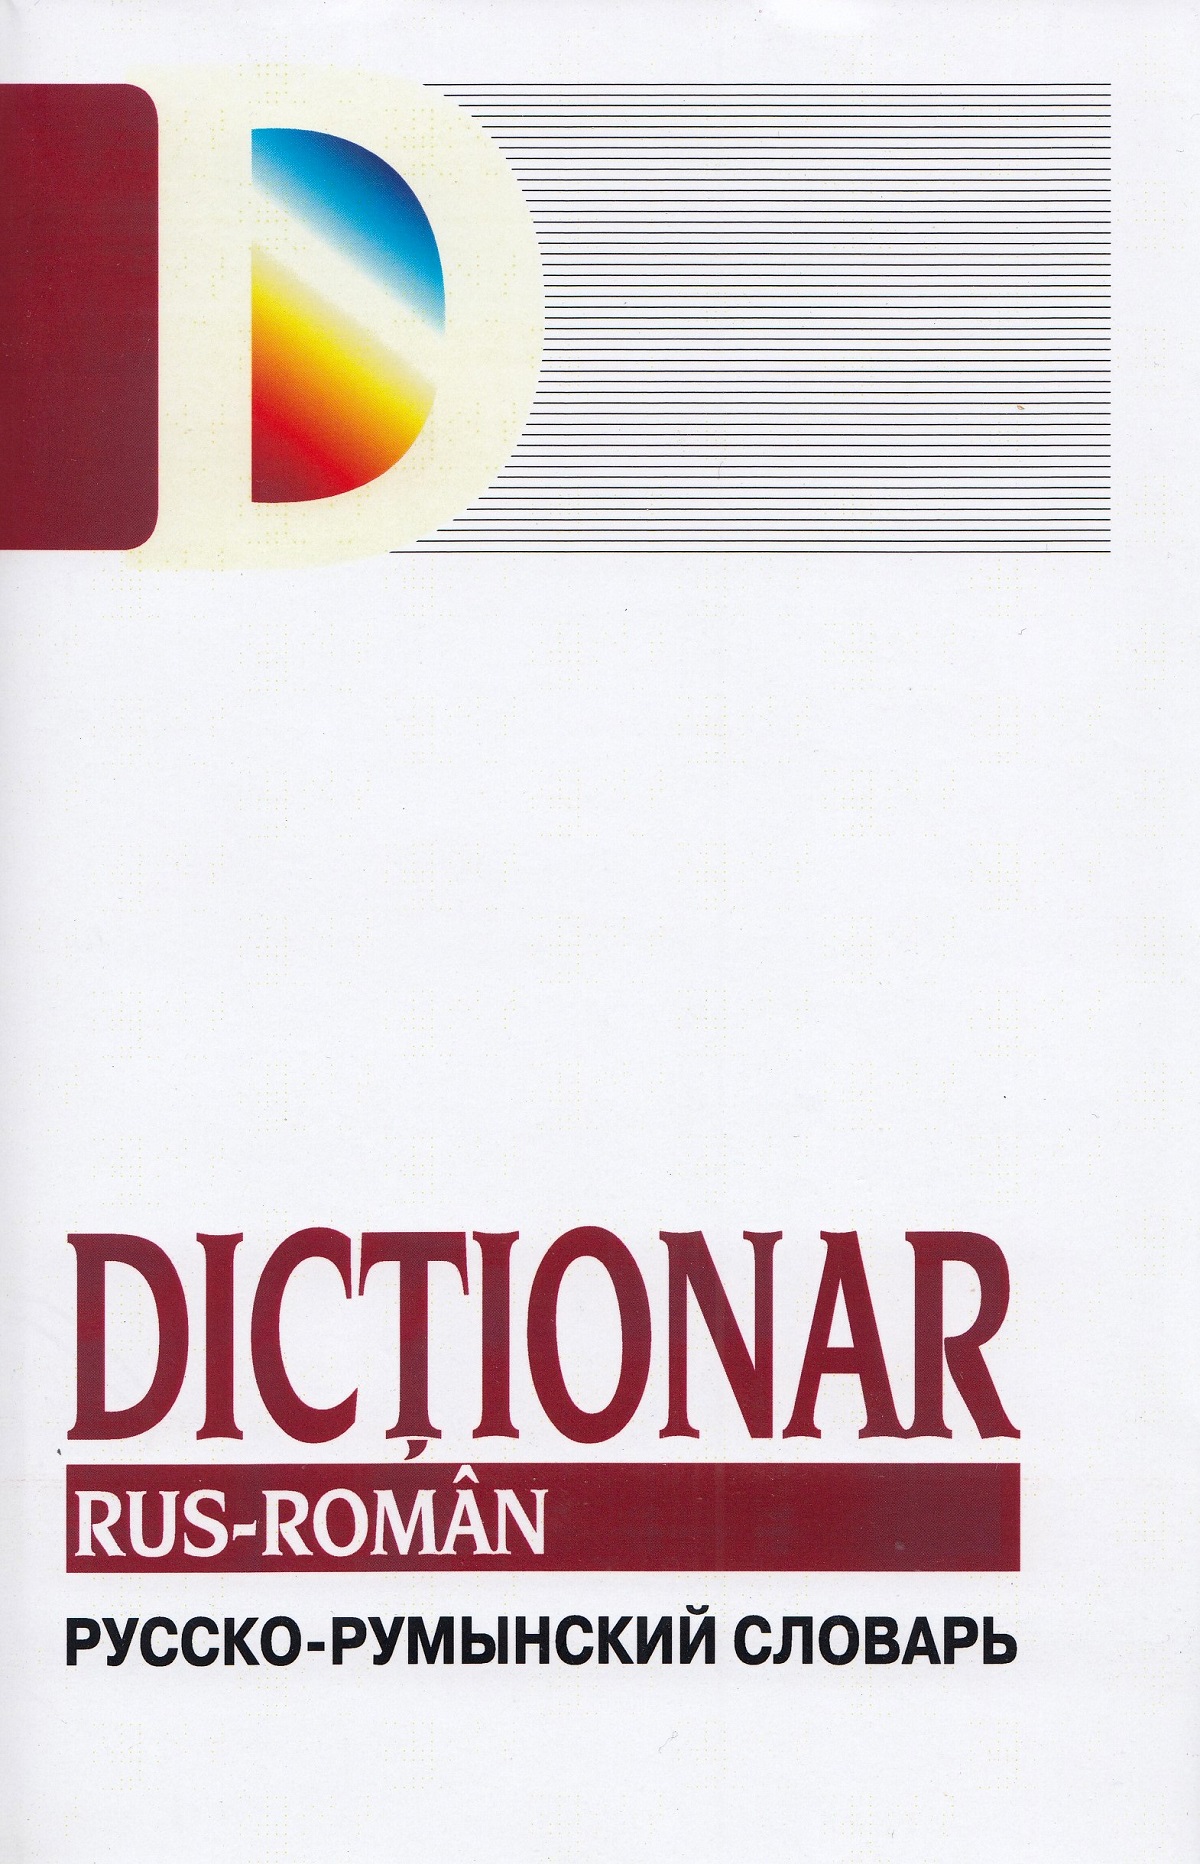 Dictionar rus-roman - Gheorghe Bologan